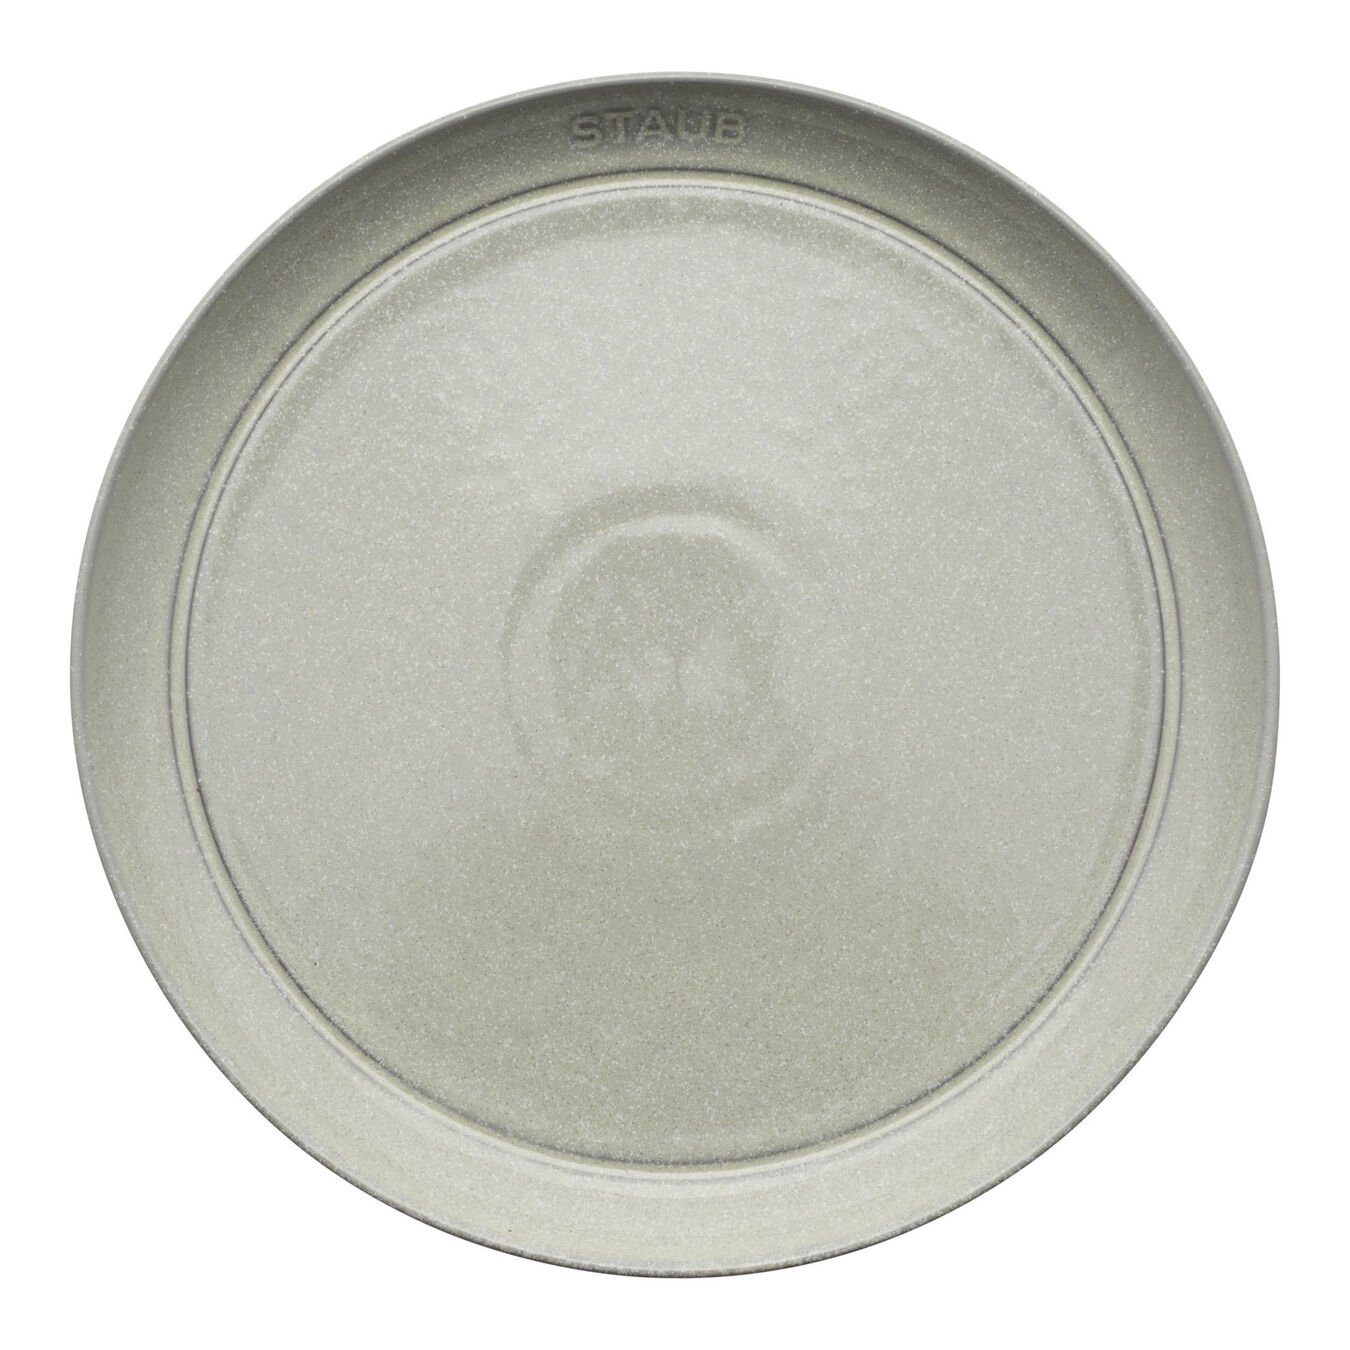 Dinner Plate Set, 4 Piece | white truffle | ceramic,,large 1